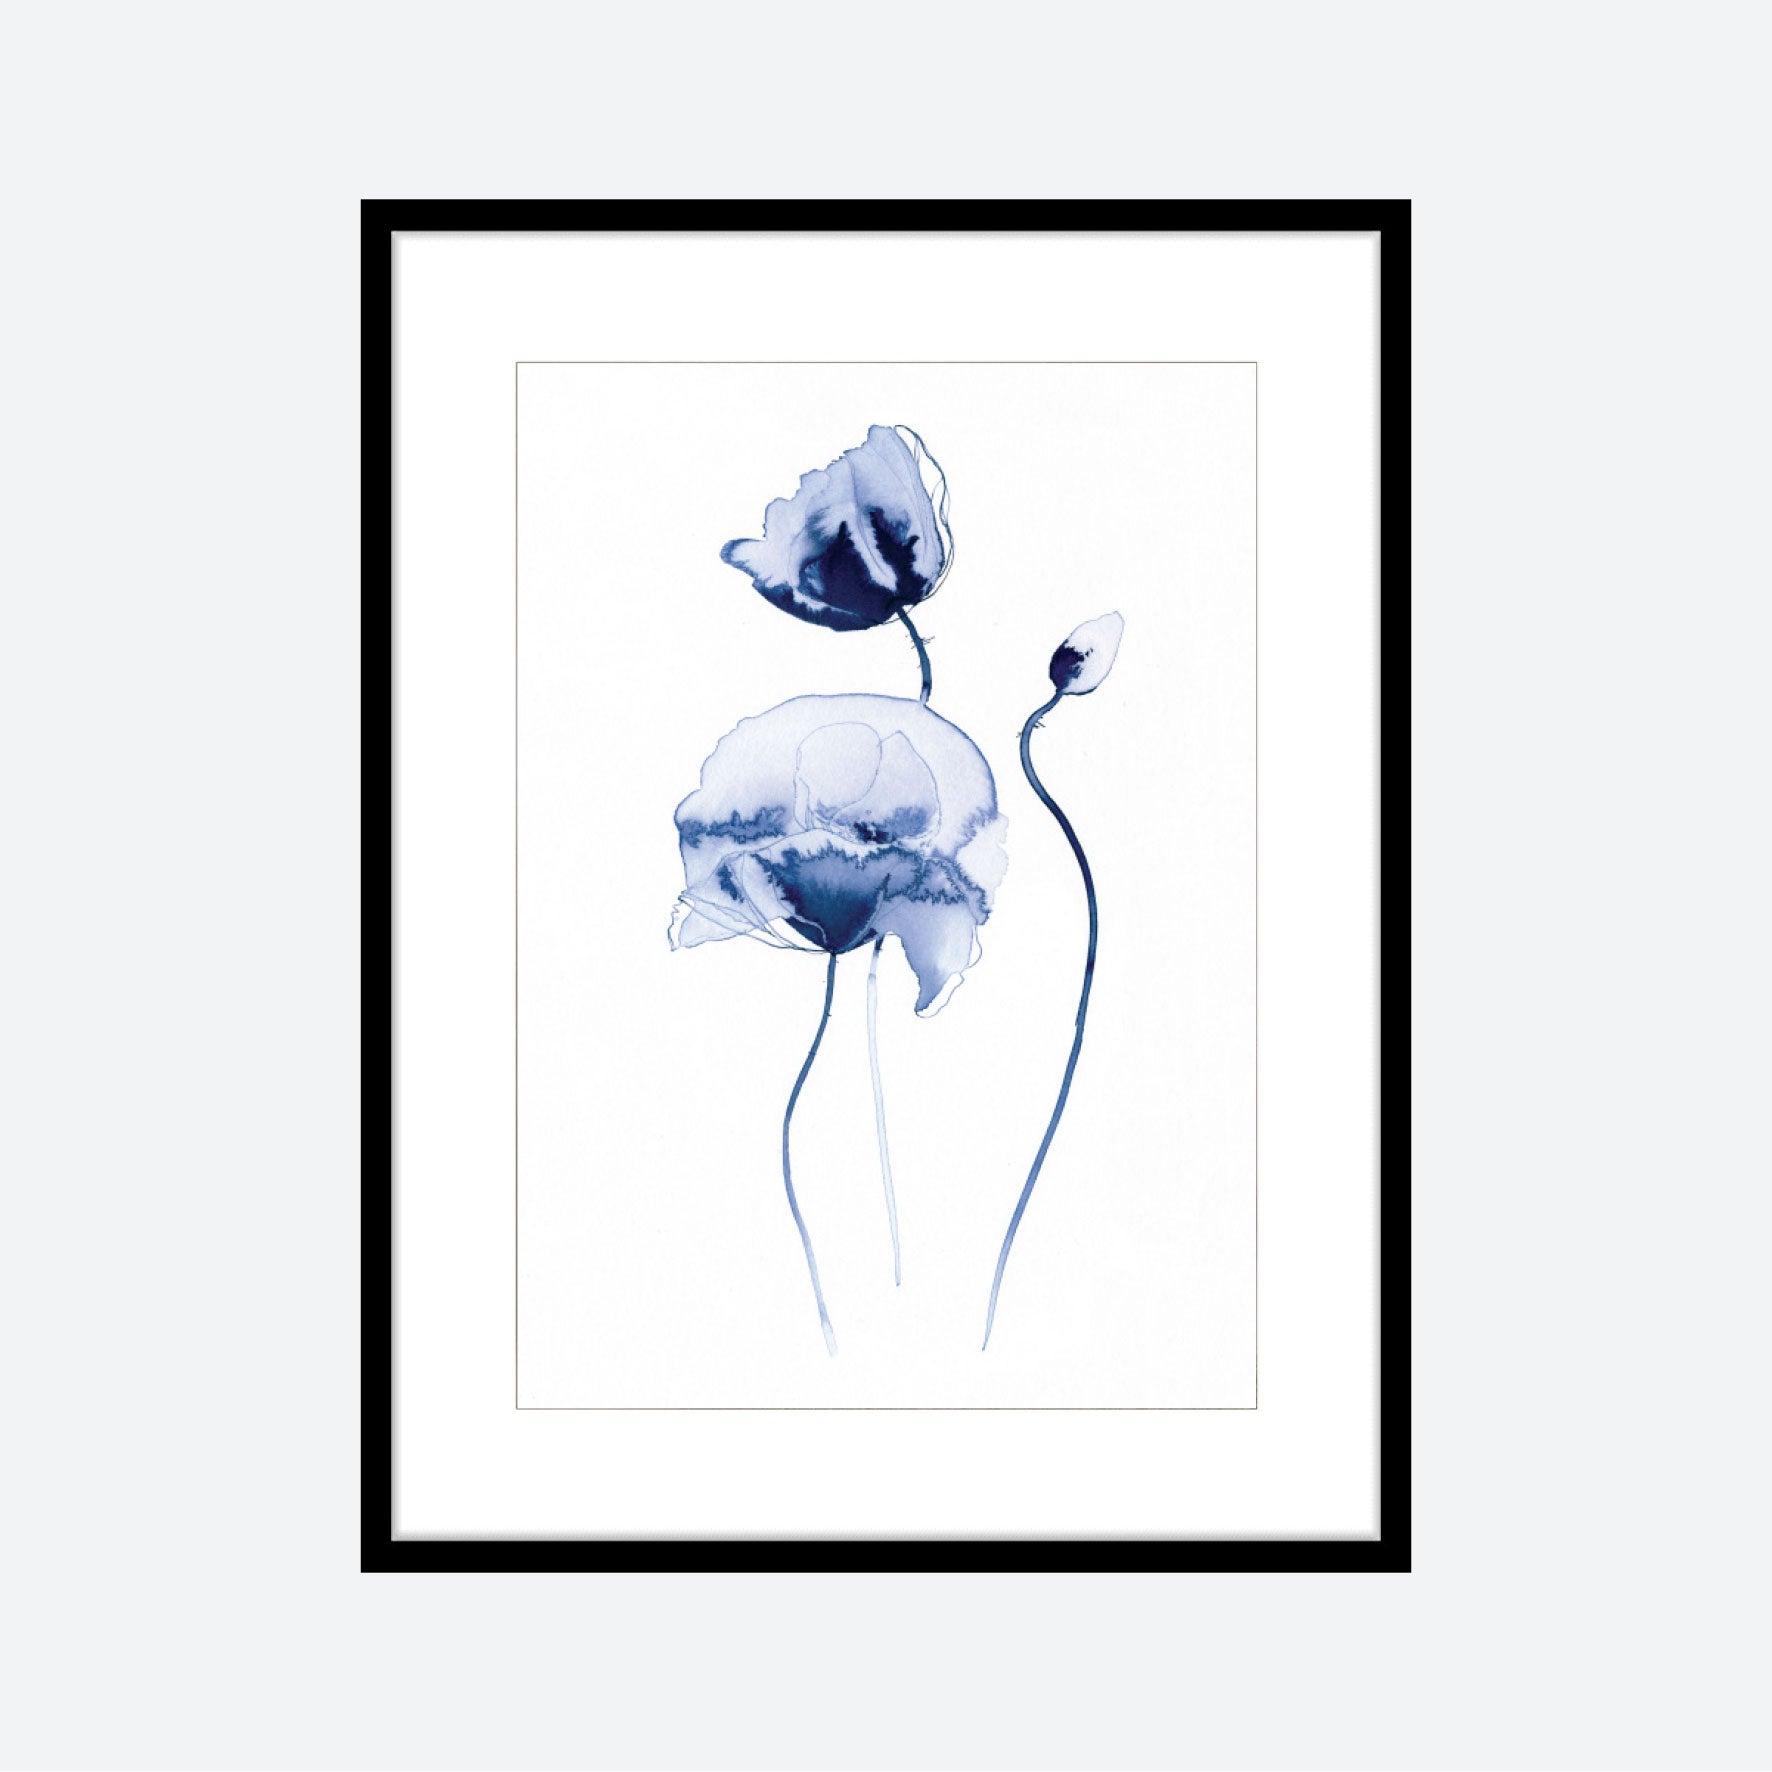 Toril Baekmark - Fine Art Prints - Flower Poster No.68